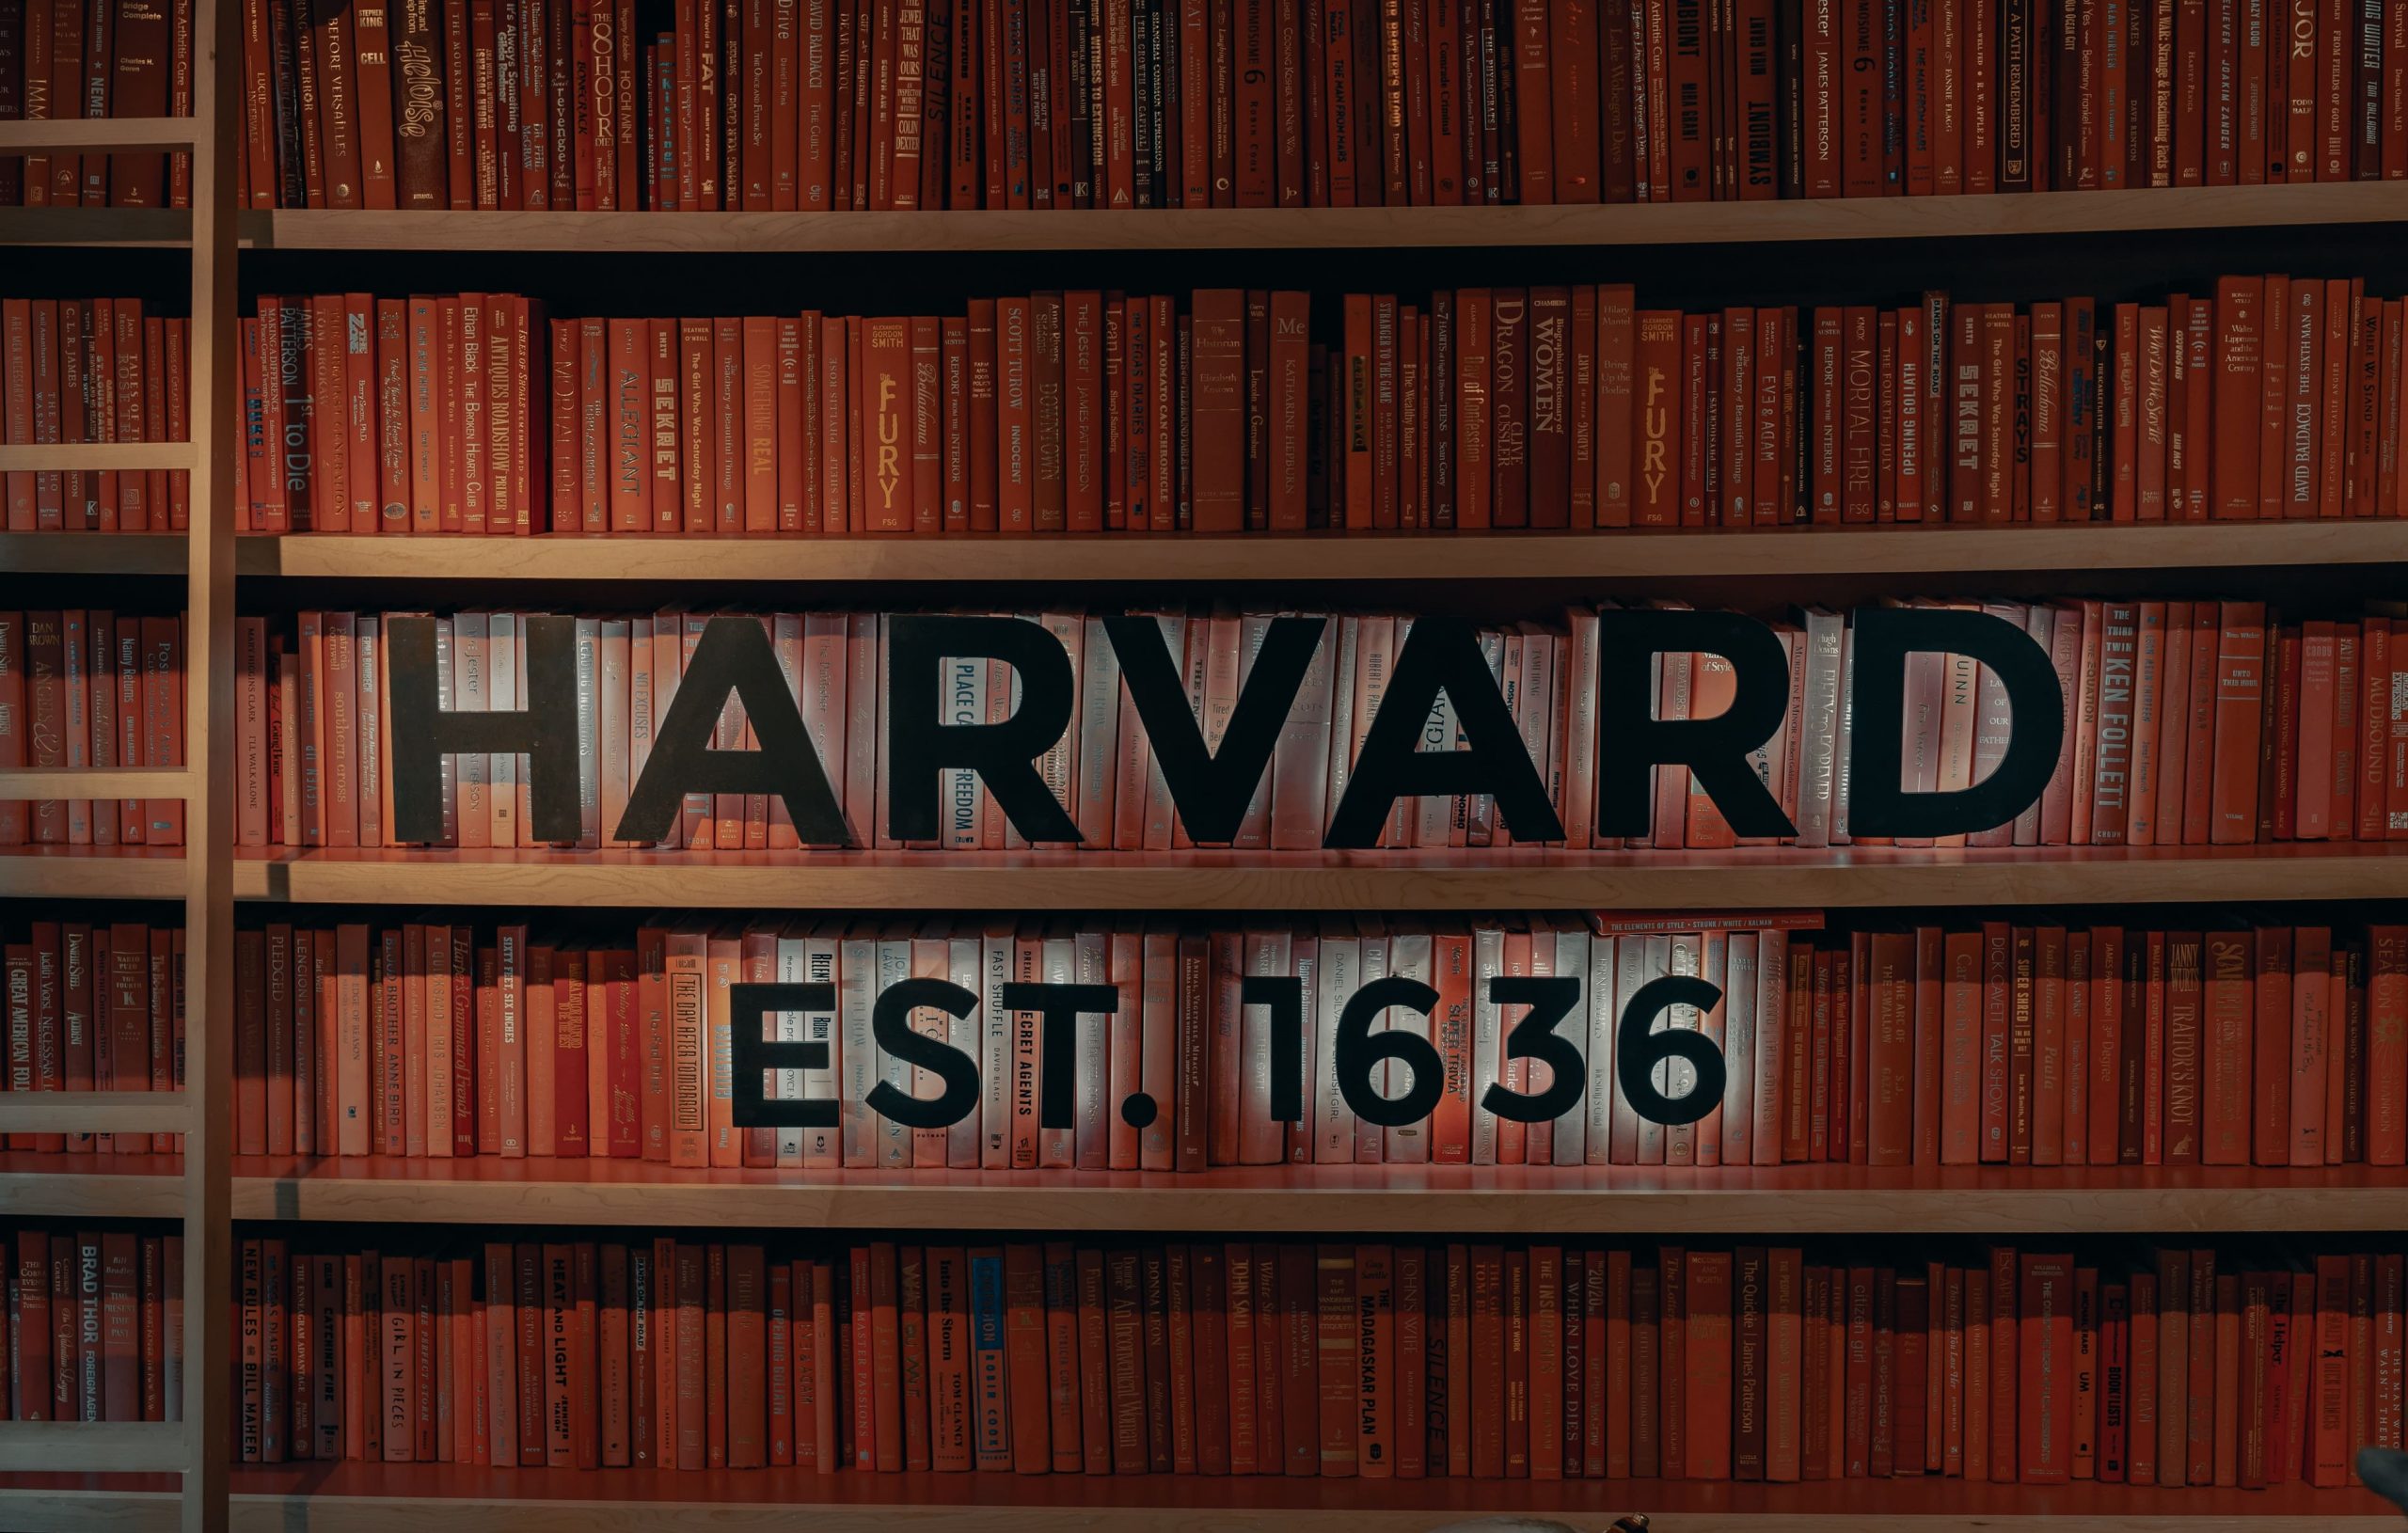 On the bookshelves, fall 2023 - Harvard Law School